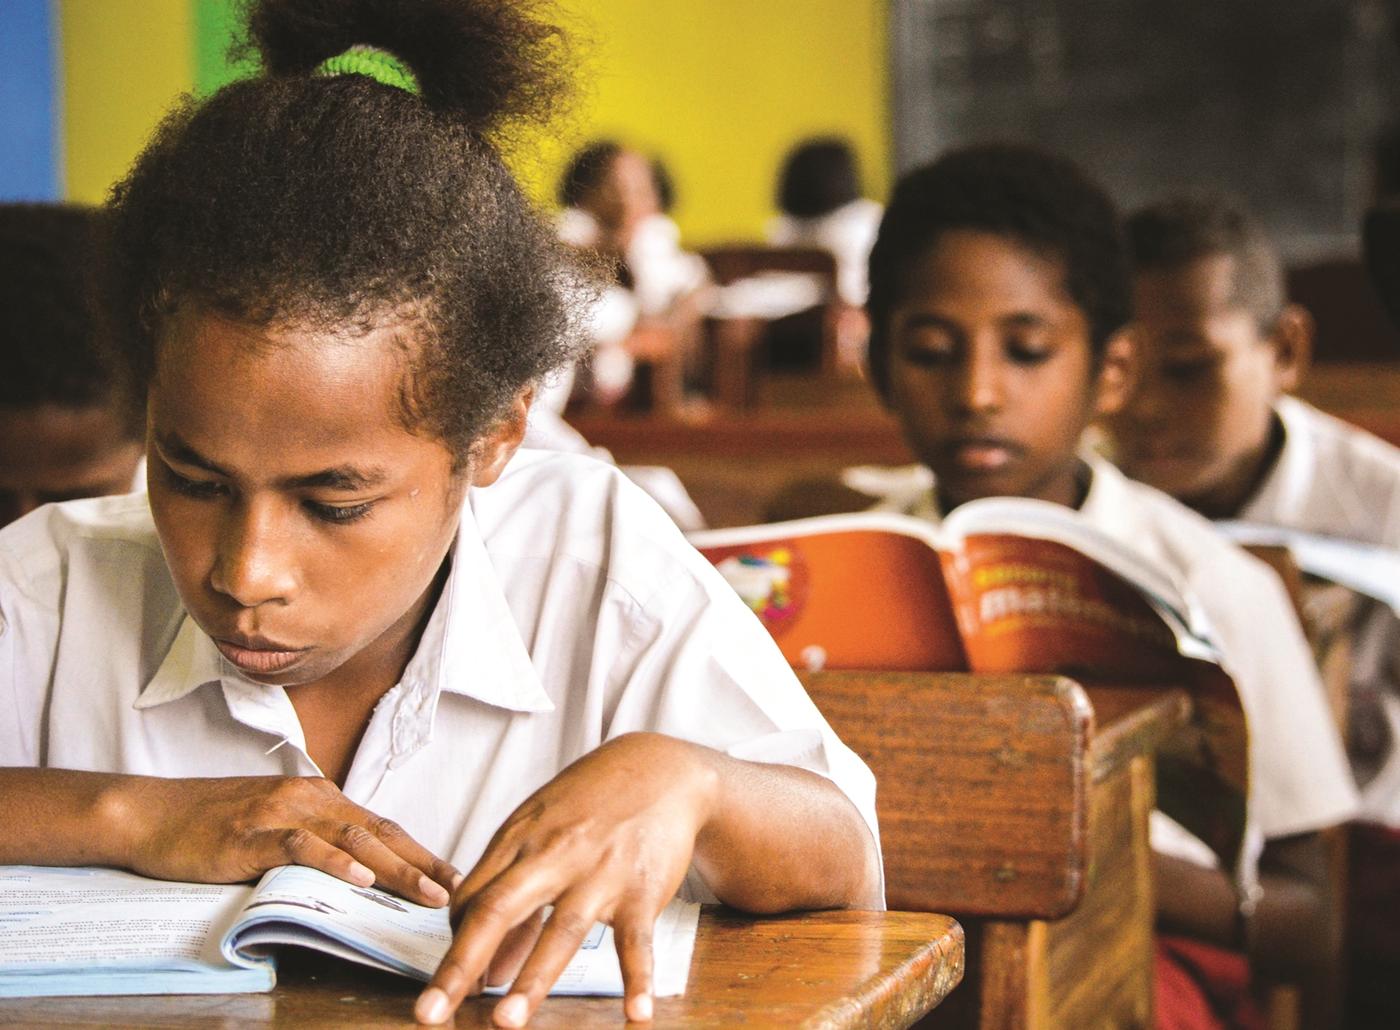 Pendidikan adalah investasi penting di Papua Barat. Program ‘2025 Satu Rumah Satu Sarjana’ jelas tidak main-main. Kini Ibu Magdalena dan aparat kampung mulai mempersiapkan banyak hal untuk mencapainya. Foto : Jenny P. Karay/Yayasan BaKTI